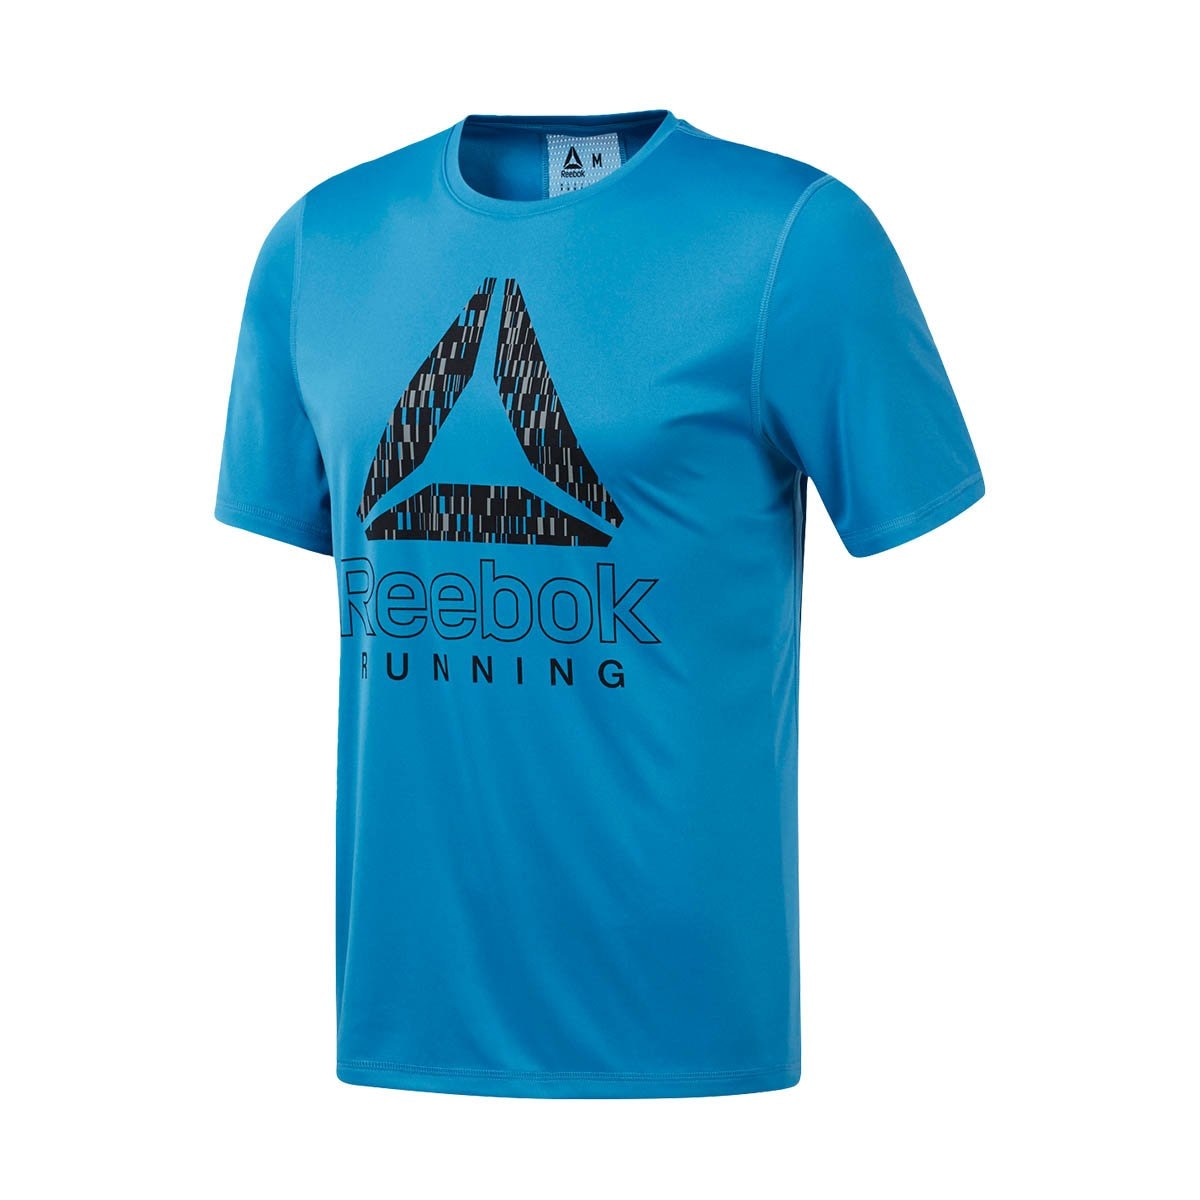 Camiseta running reebok - caballero - Sears